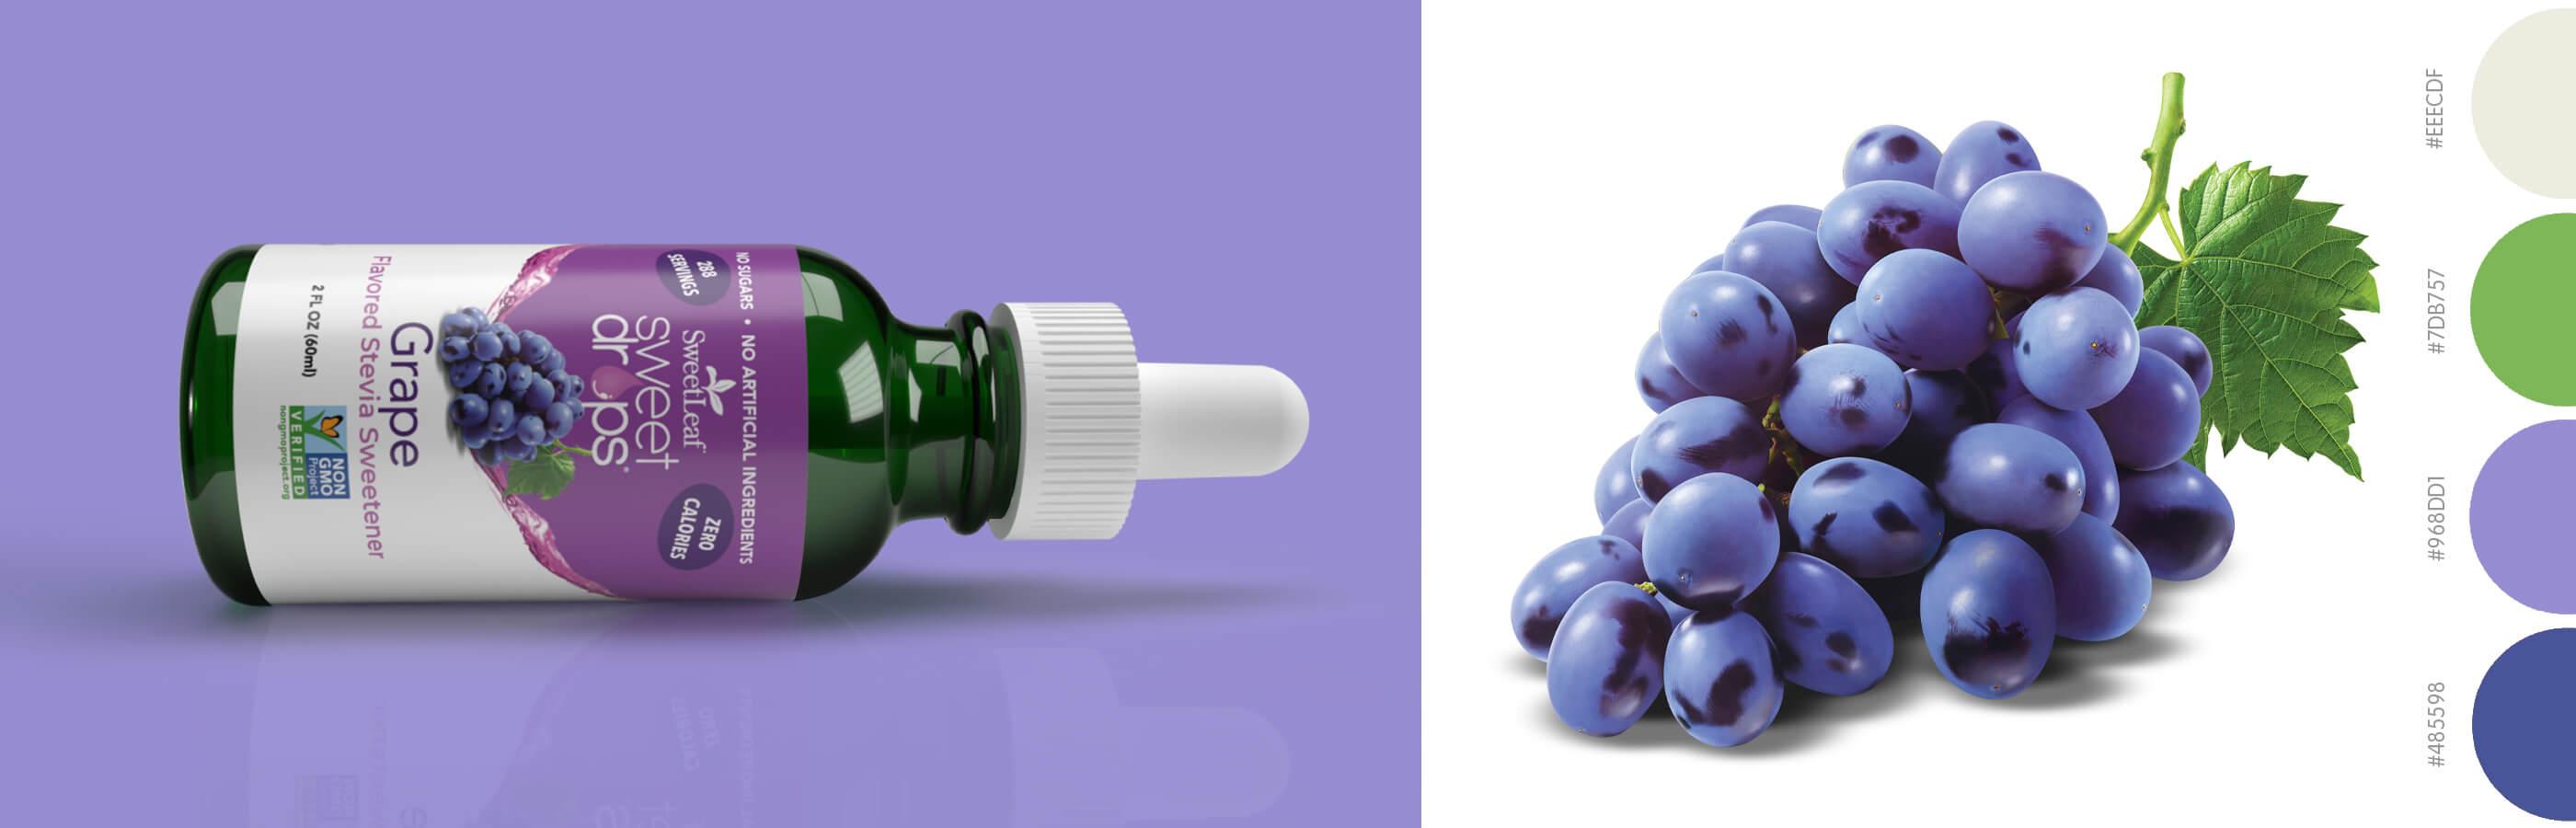 sweet drops grape package design image